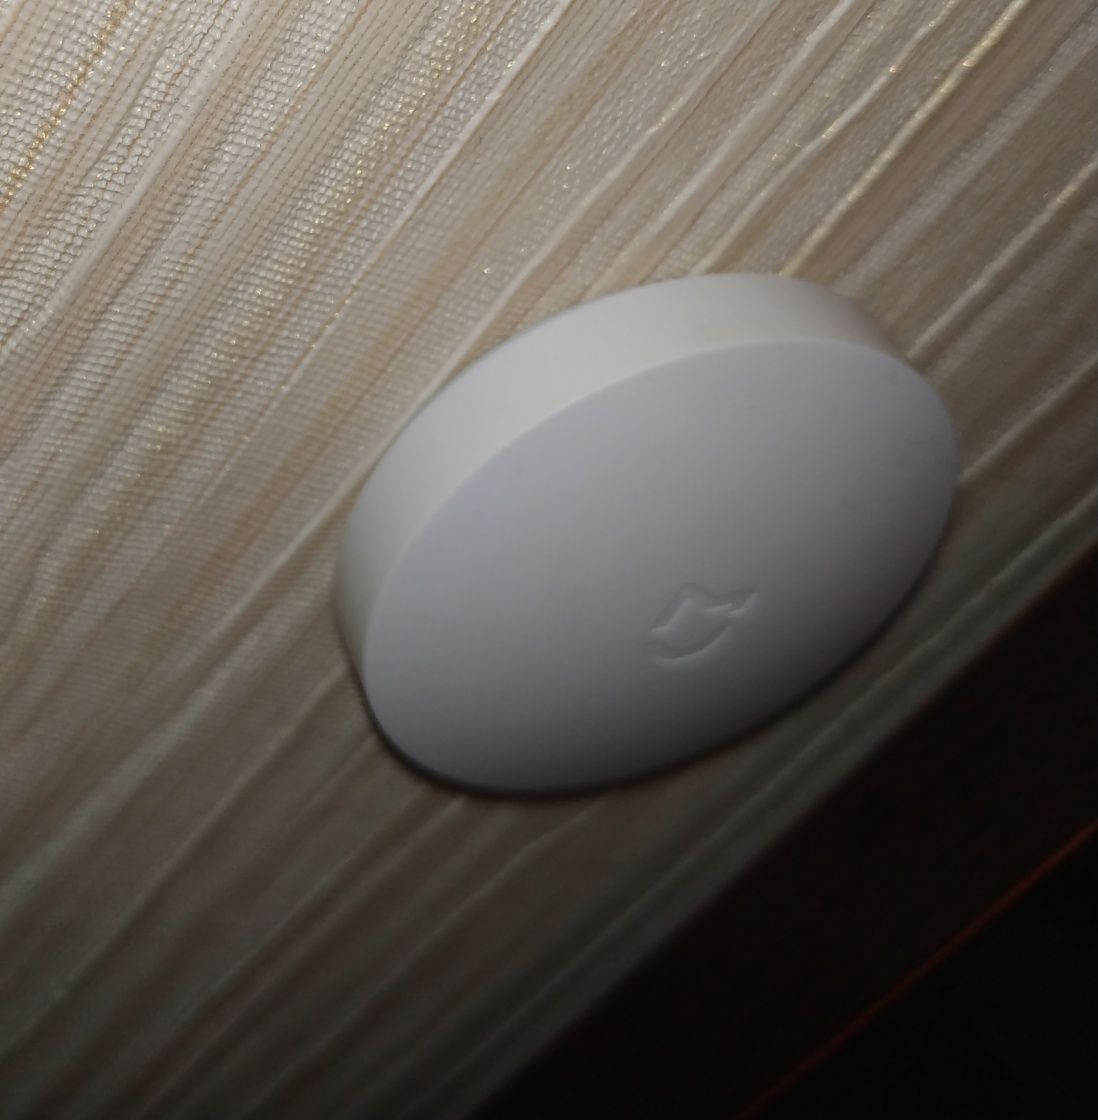 Беспроводной коммутатор Xiaomi Mi Smart Home Wireless Switch